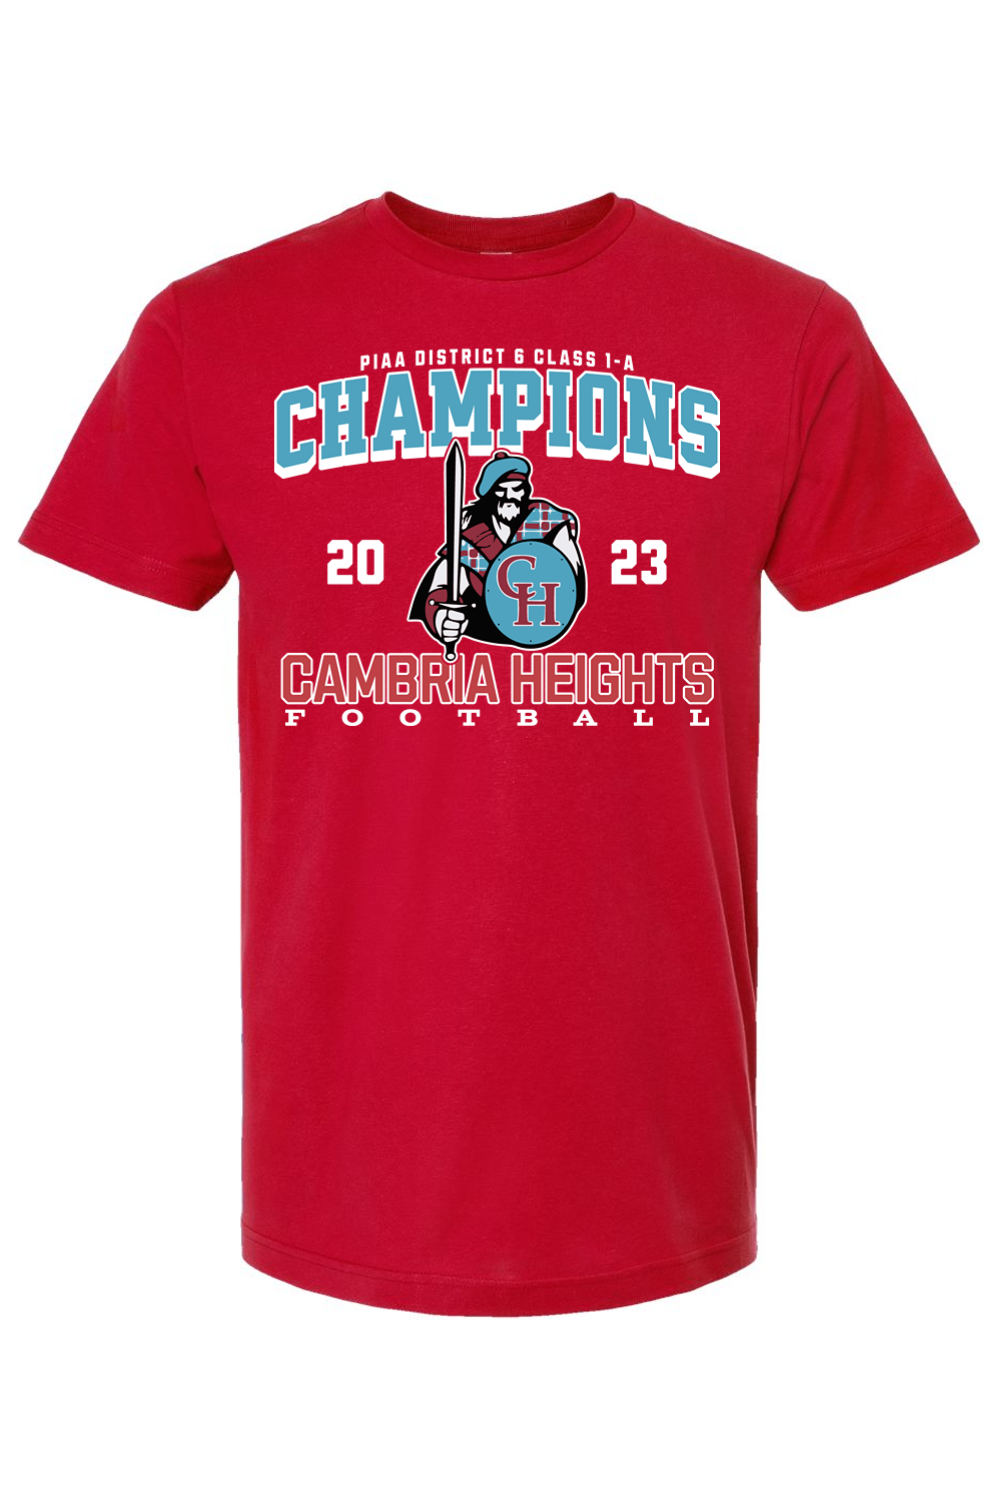 CH Champions - All Star - T-Shirt - Yinzylvania